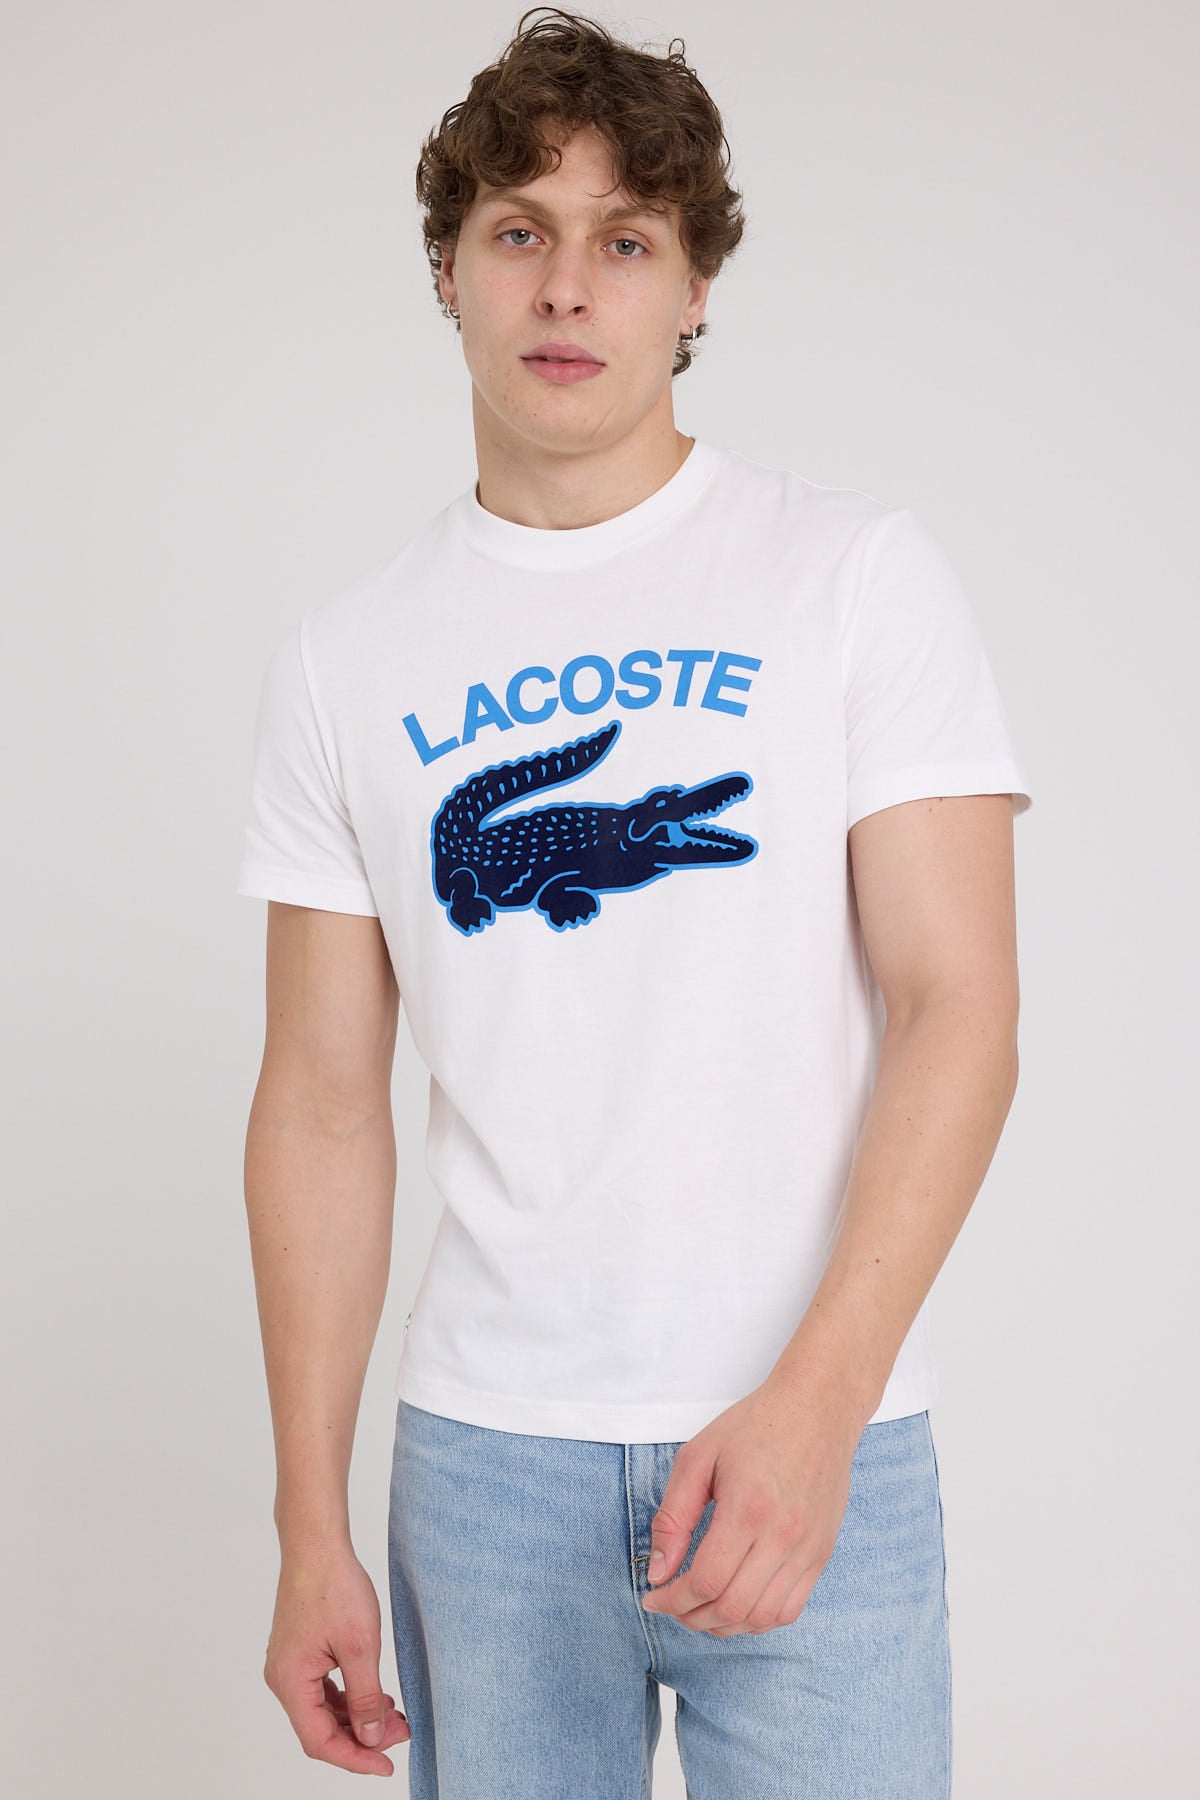 Lacoste Graphic Big Croc T-Shirt White